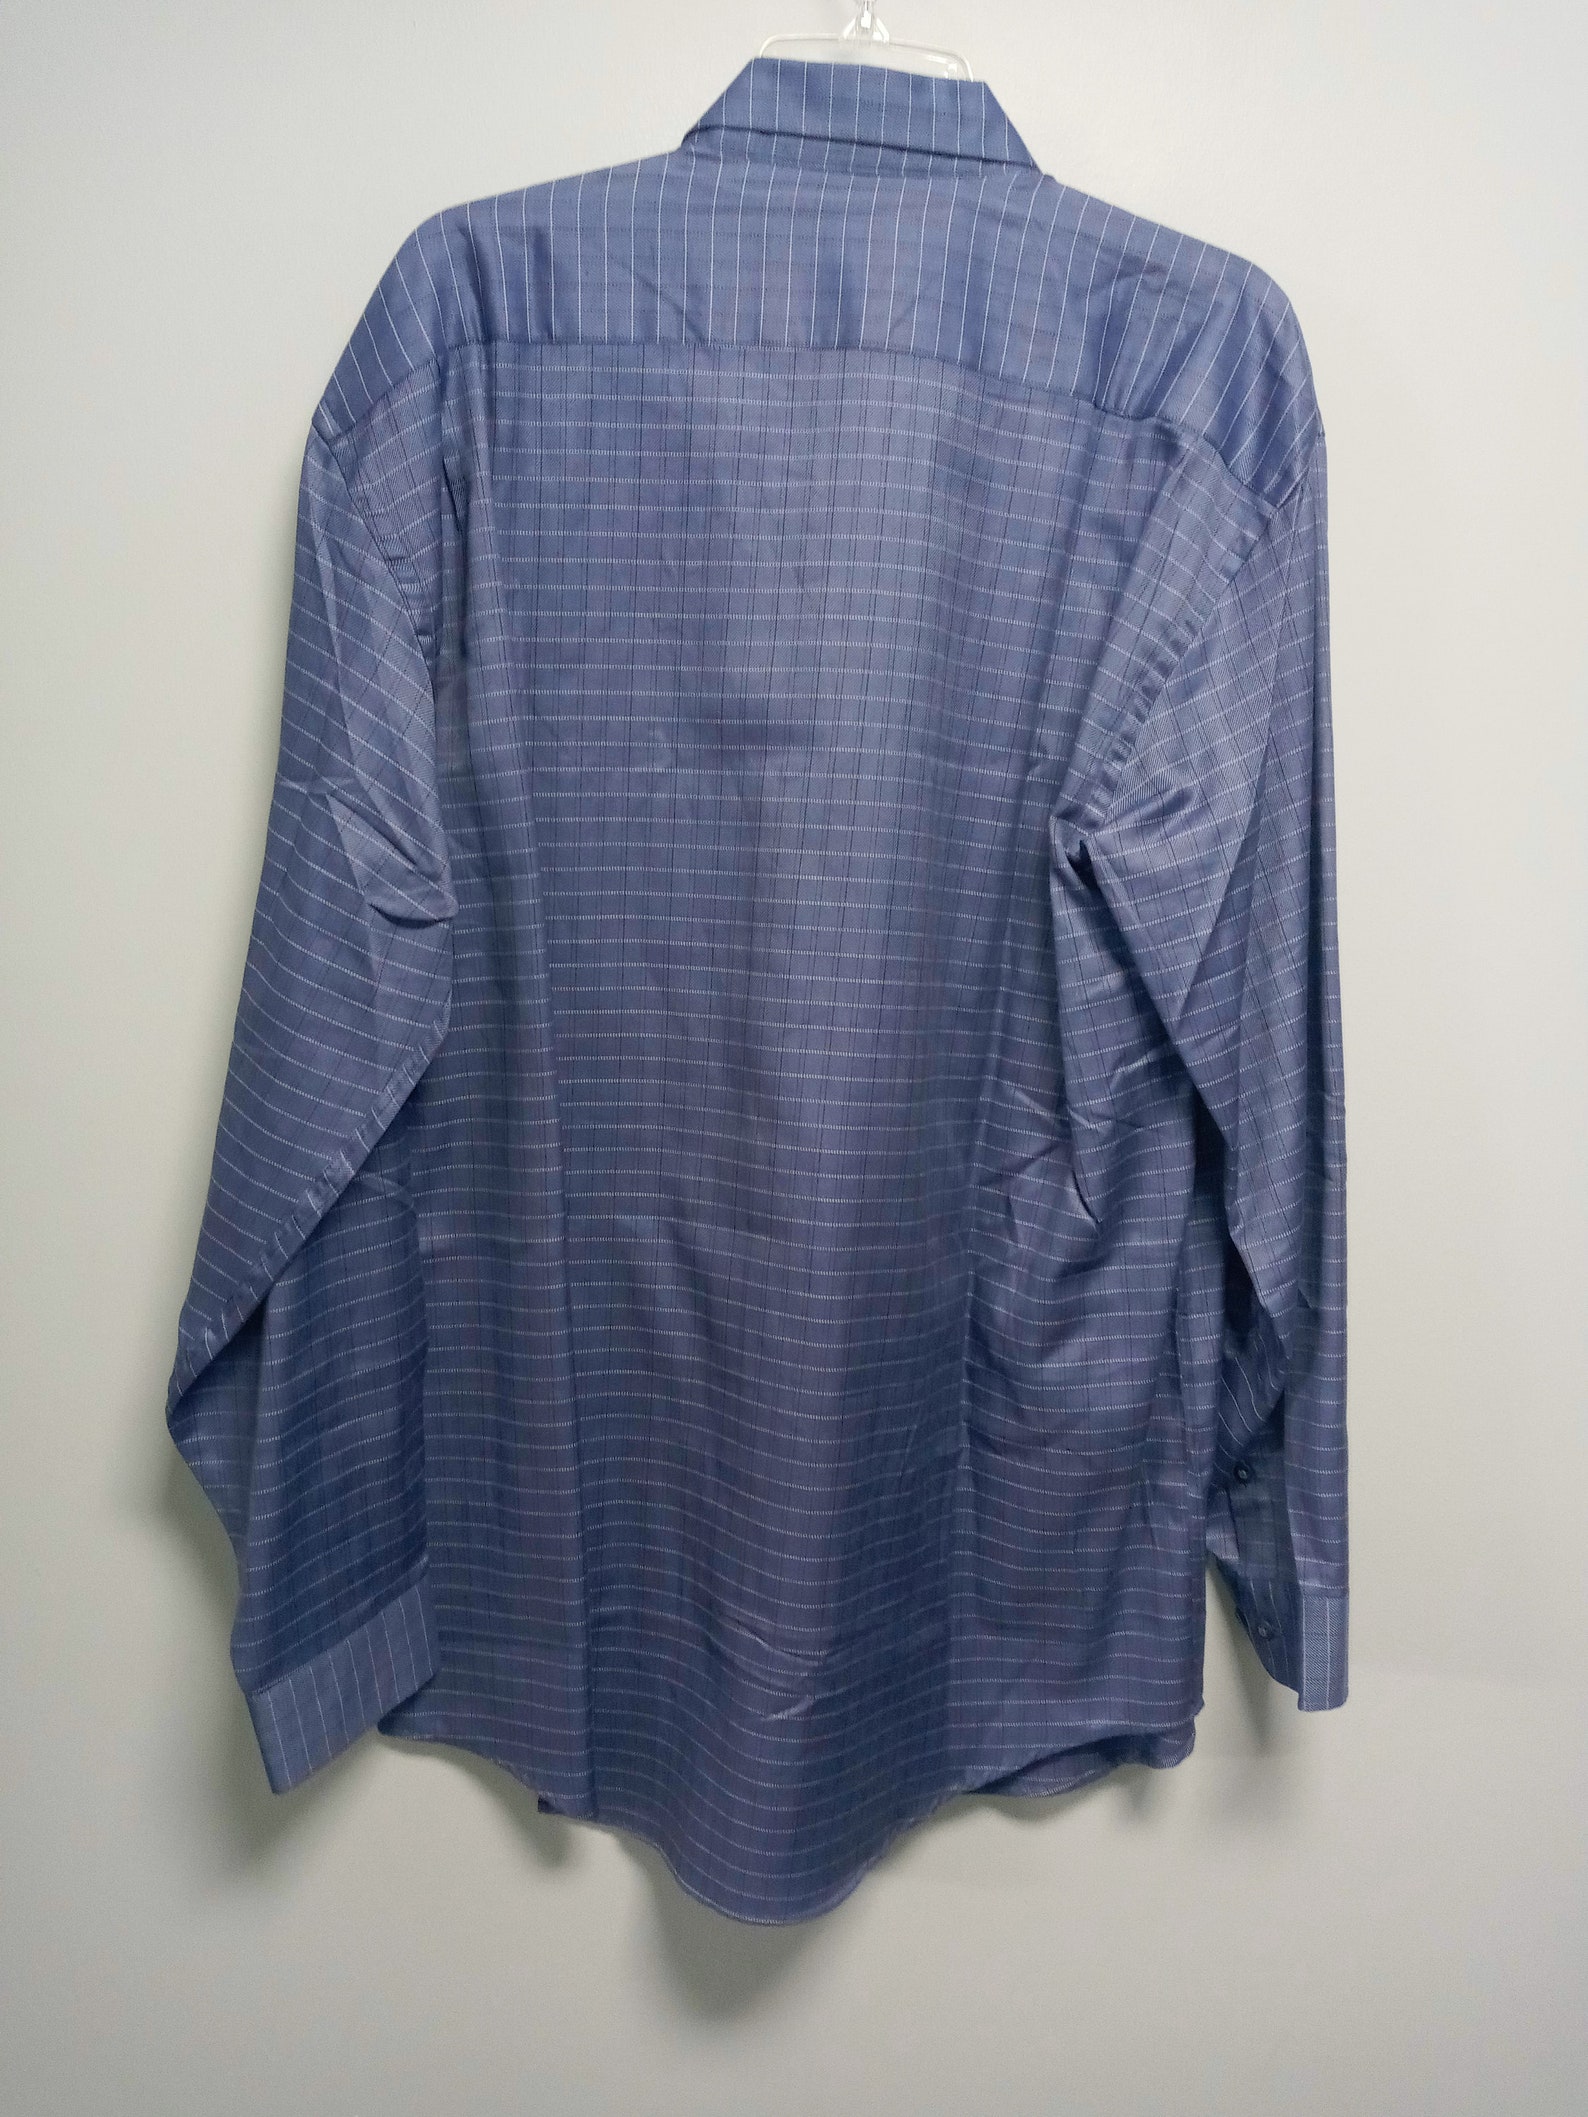 Vintage Mens Long Sleeve Shirt by JOSEPH ABBOUD 100% Cotton | Etsy